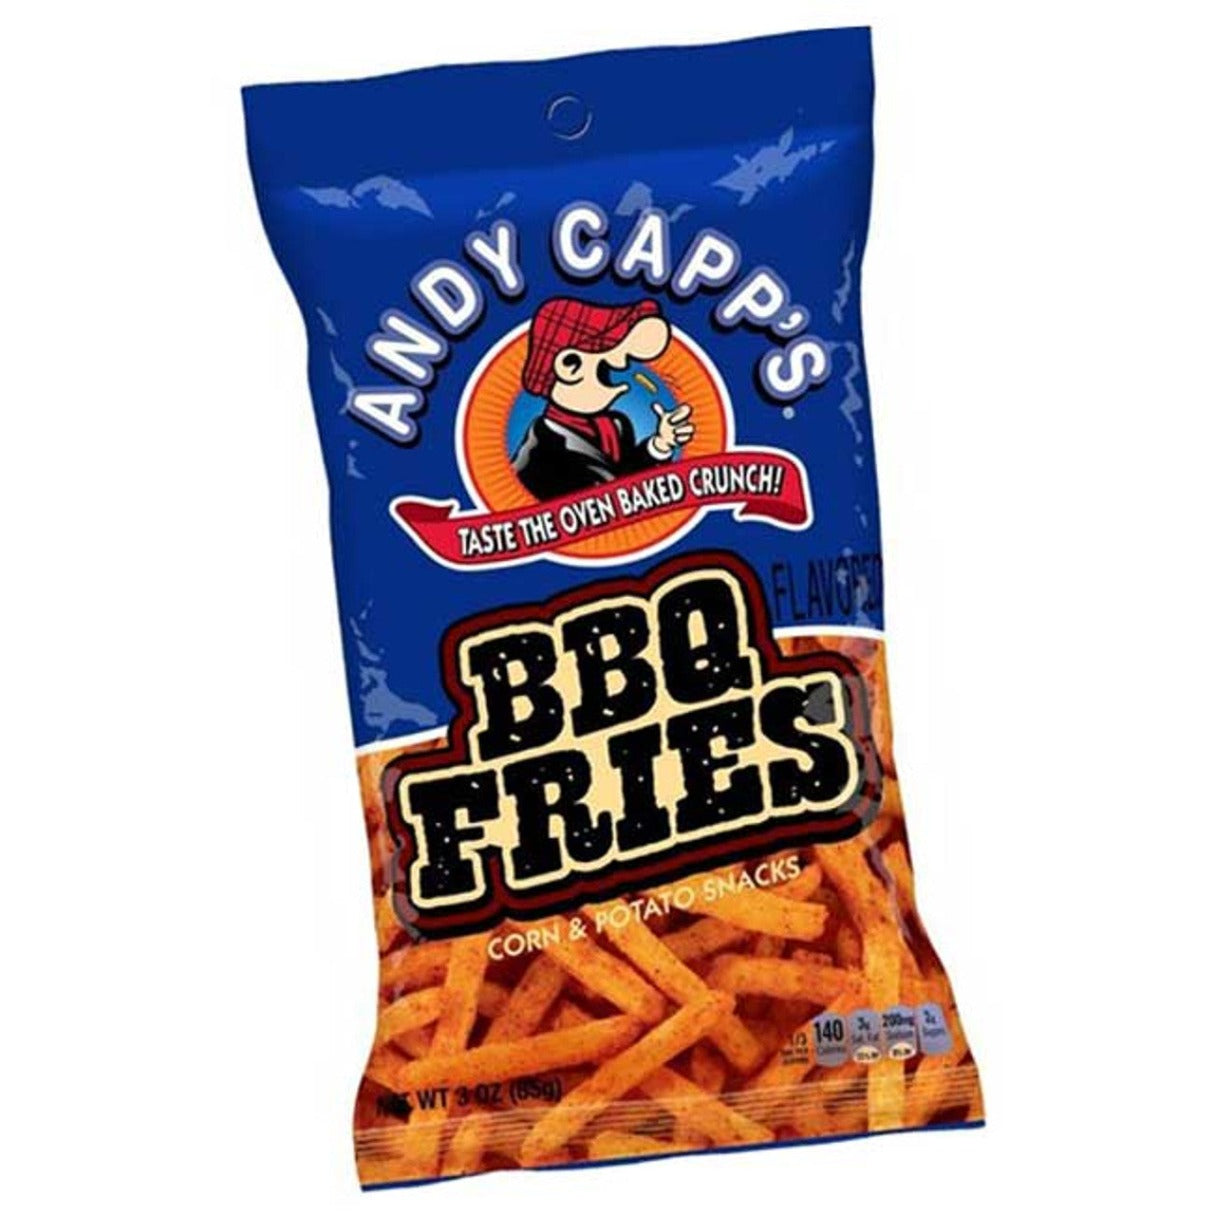 Andy Capp's Fries BBQ Bag 3oz - 12ct